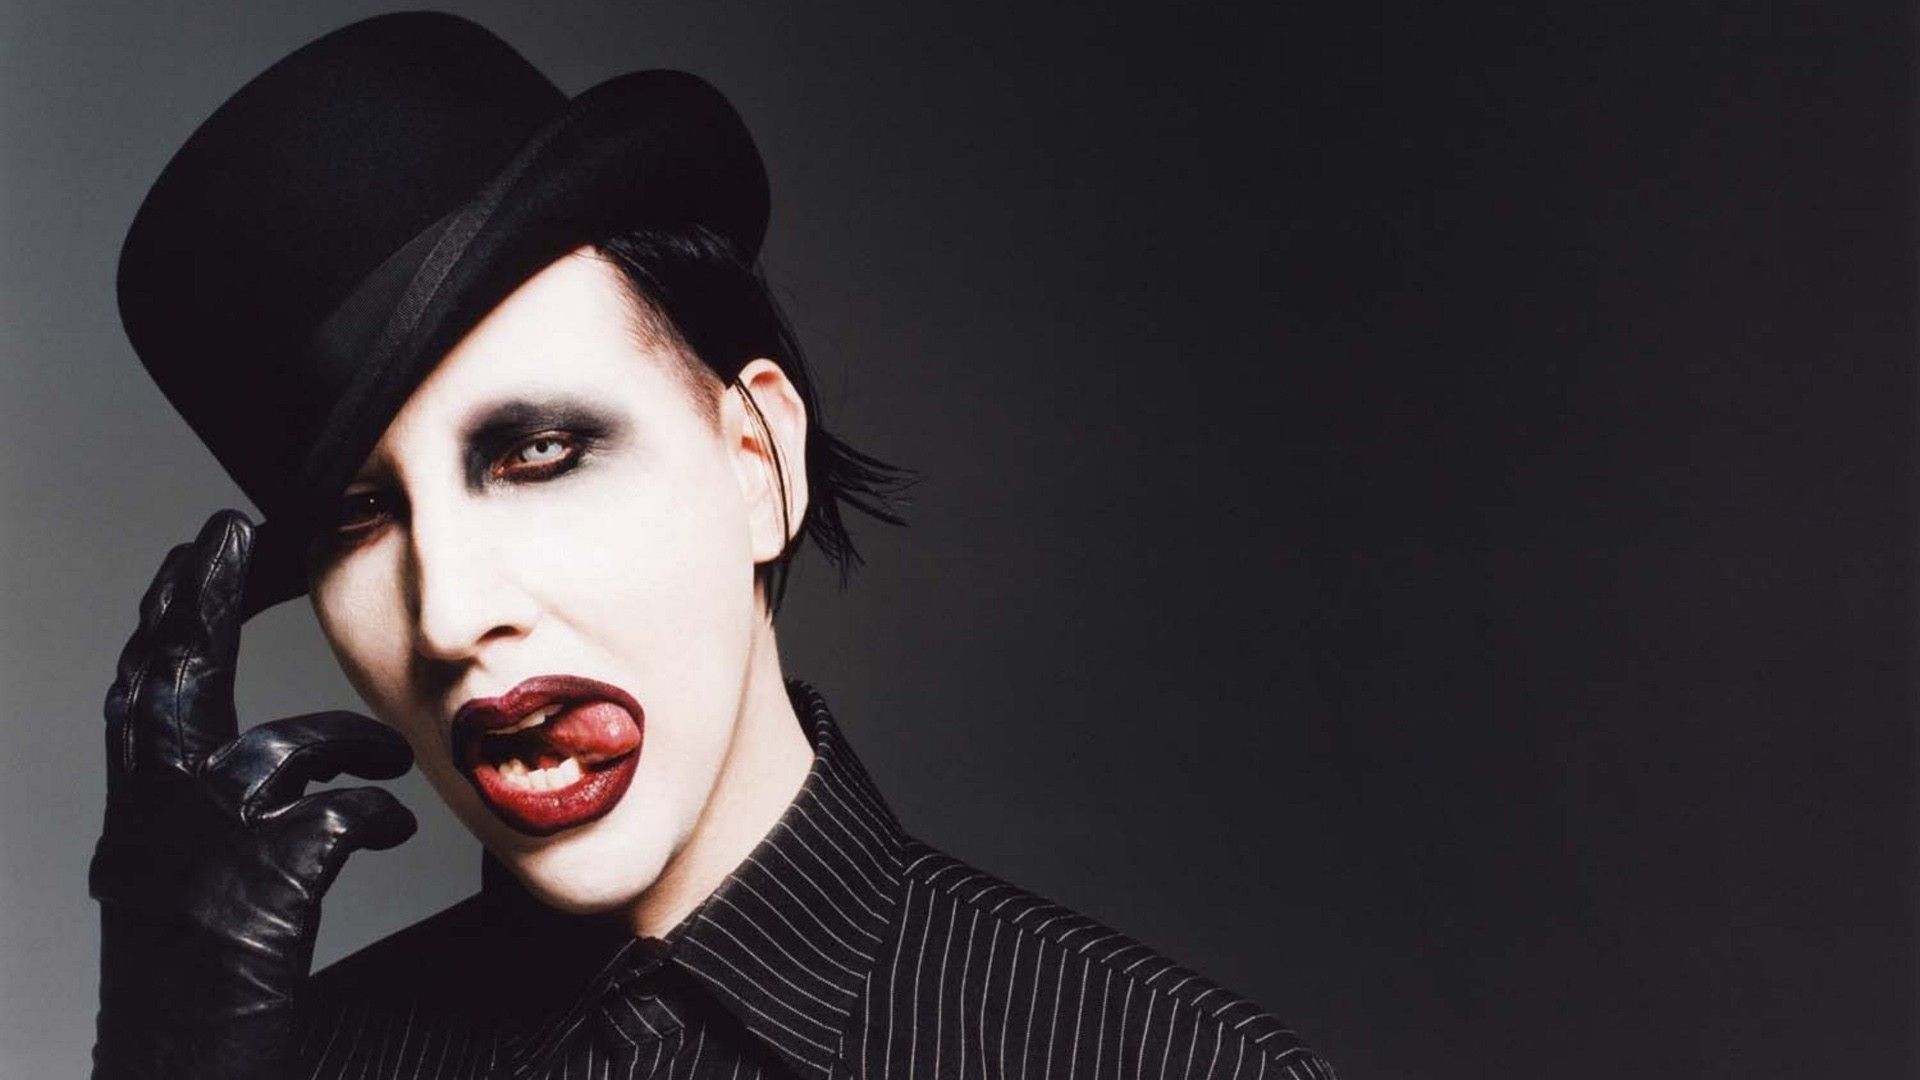 Marilyn Manson wallpaper, High-quality background, Gothic aesthetic, Dark rock vibes, 1920x1080 Full HD Desktop